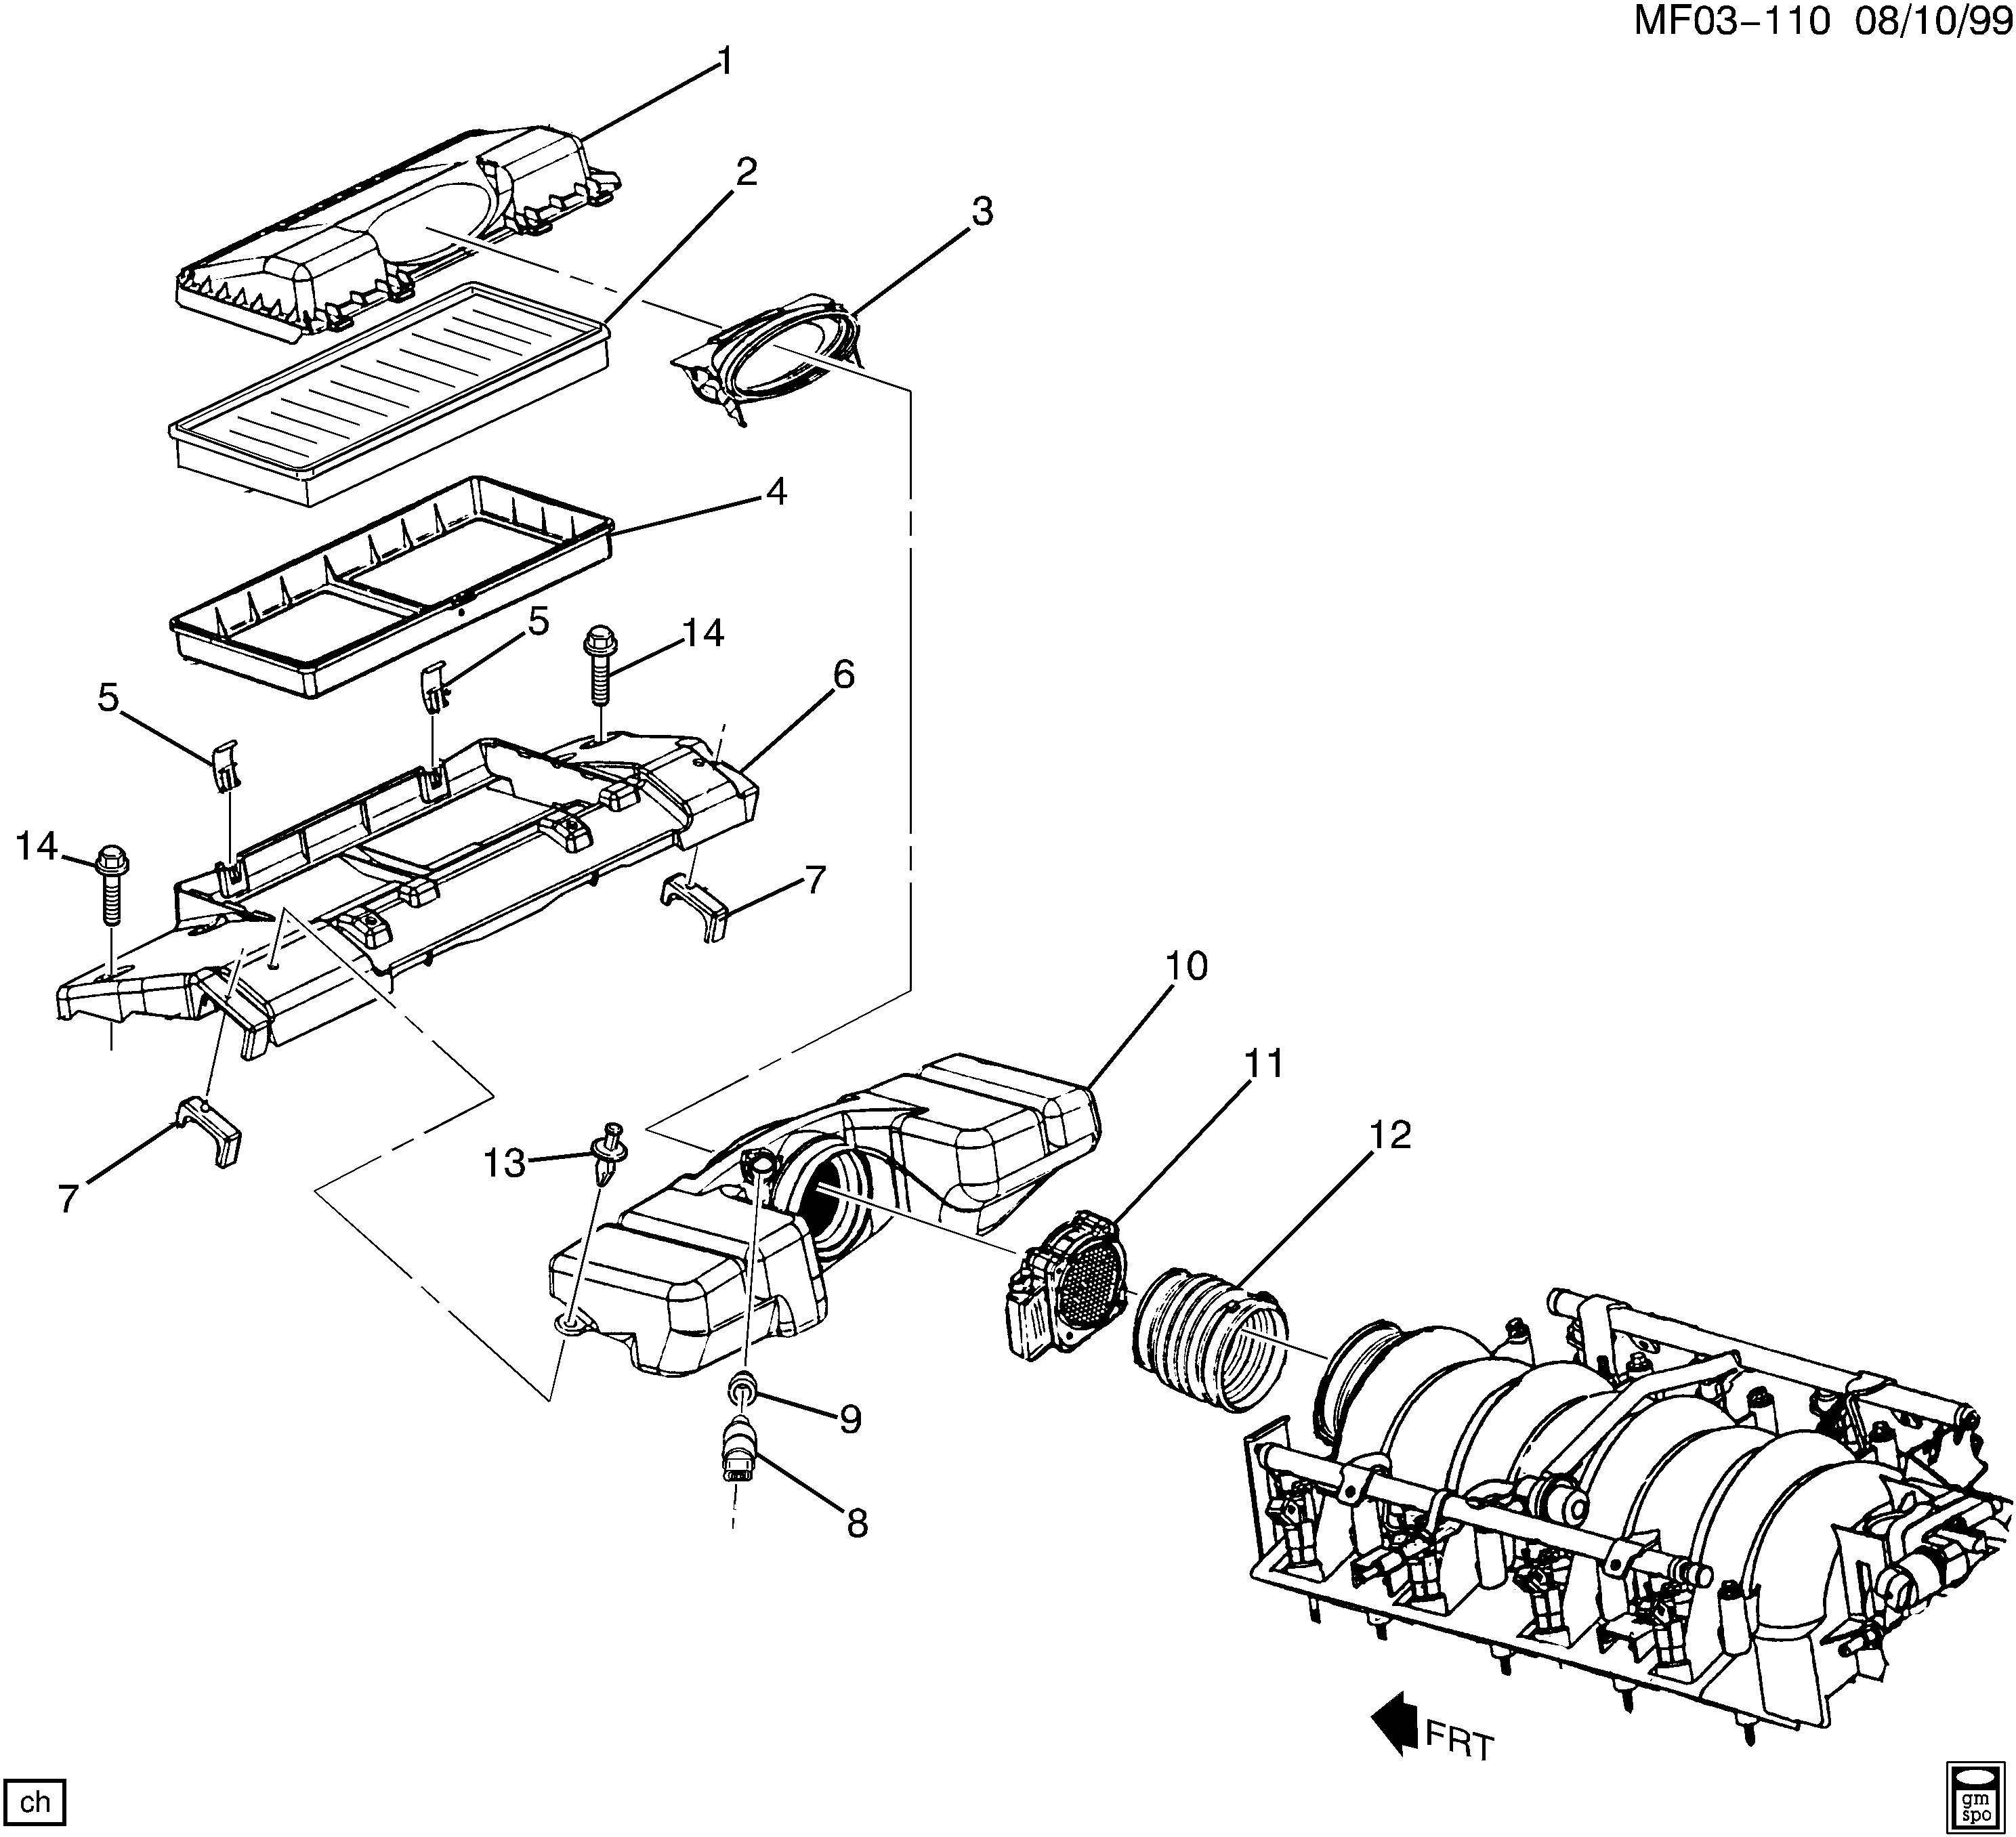 1998-2002 F AIR INTAKE SYSTEM (LS1/5.7G)